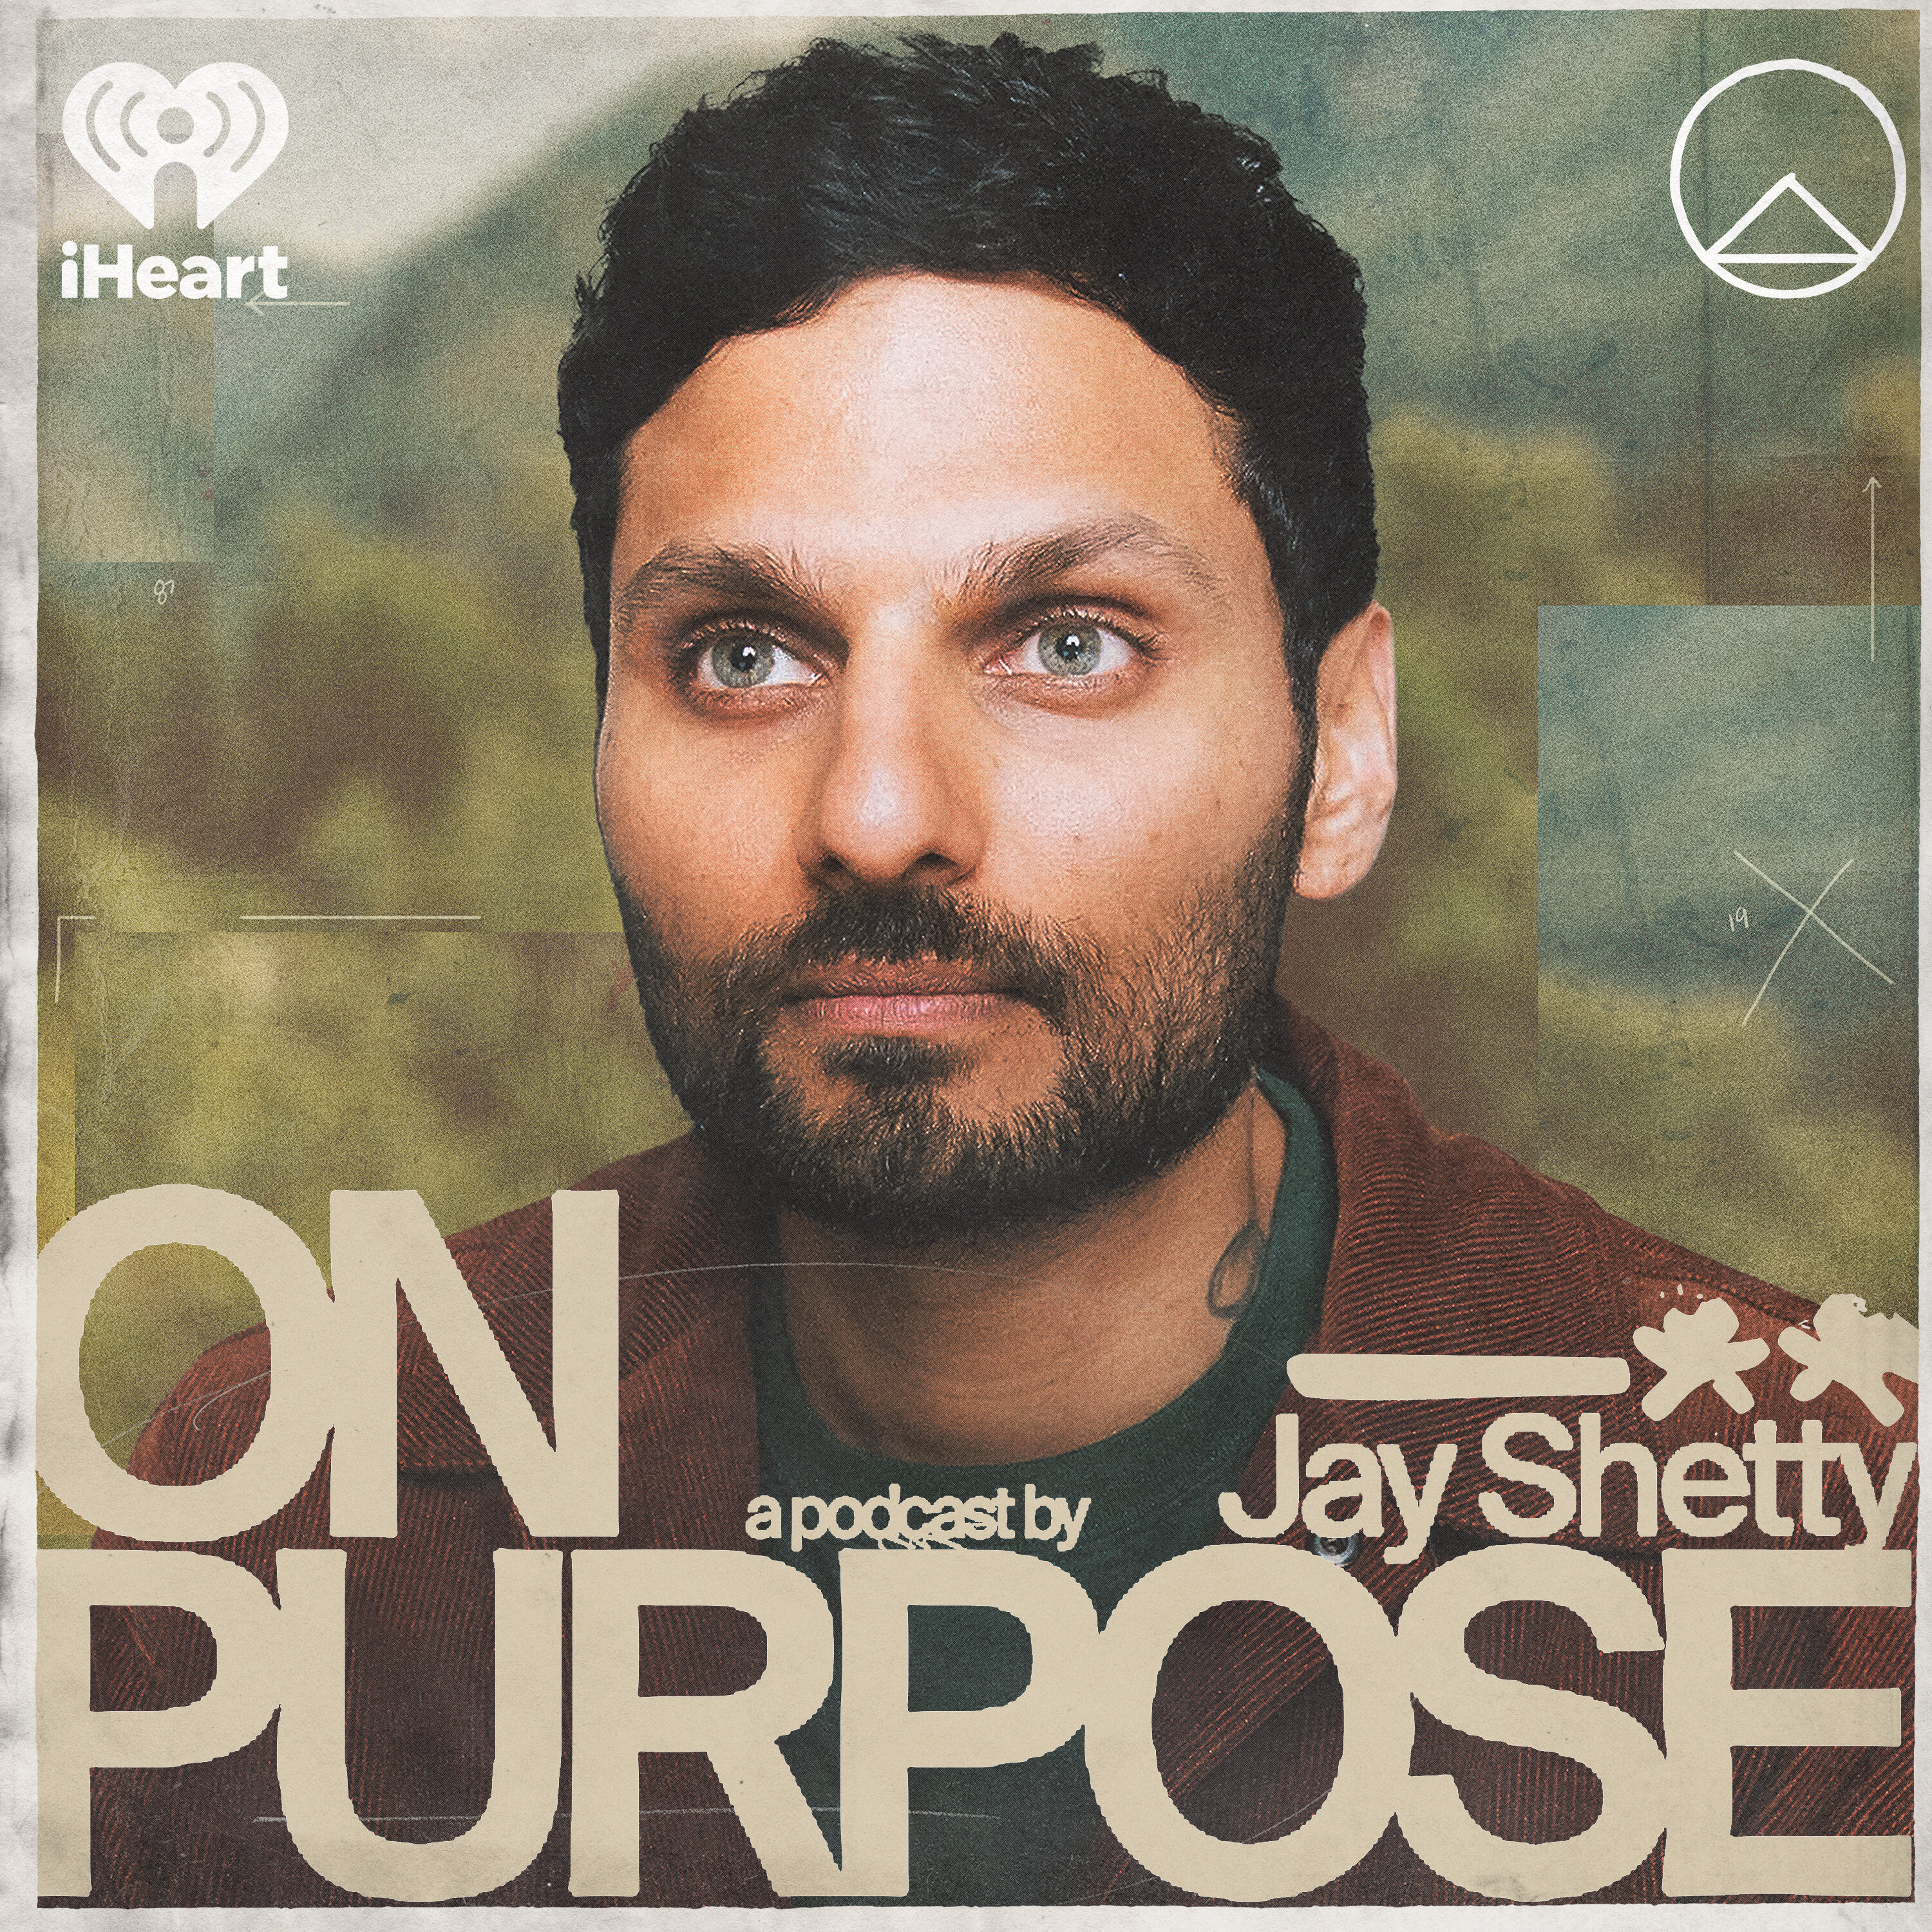 On Purpose with Jay Shetty logo